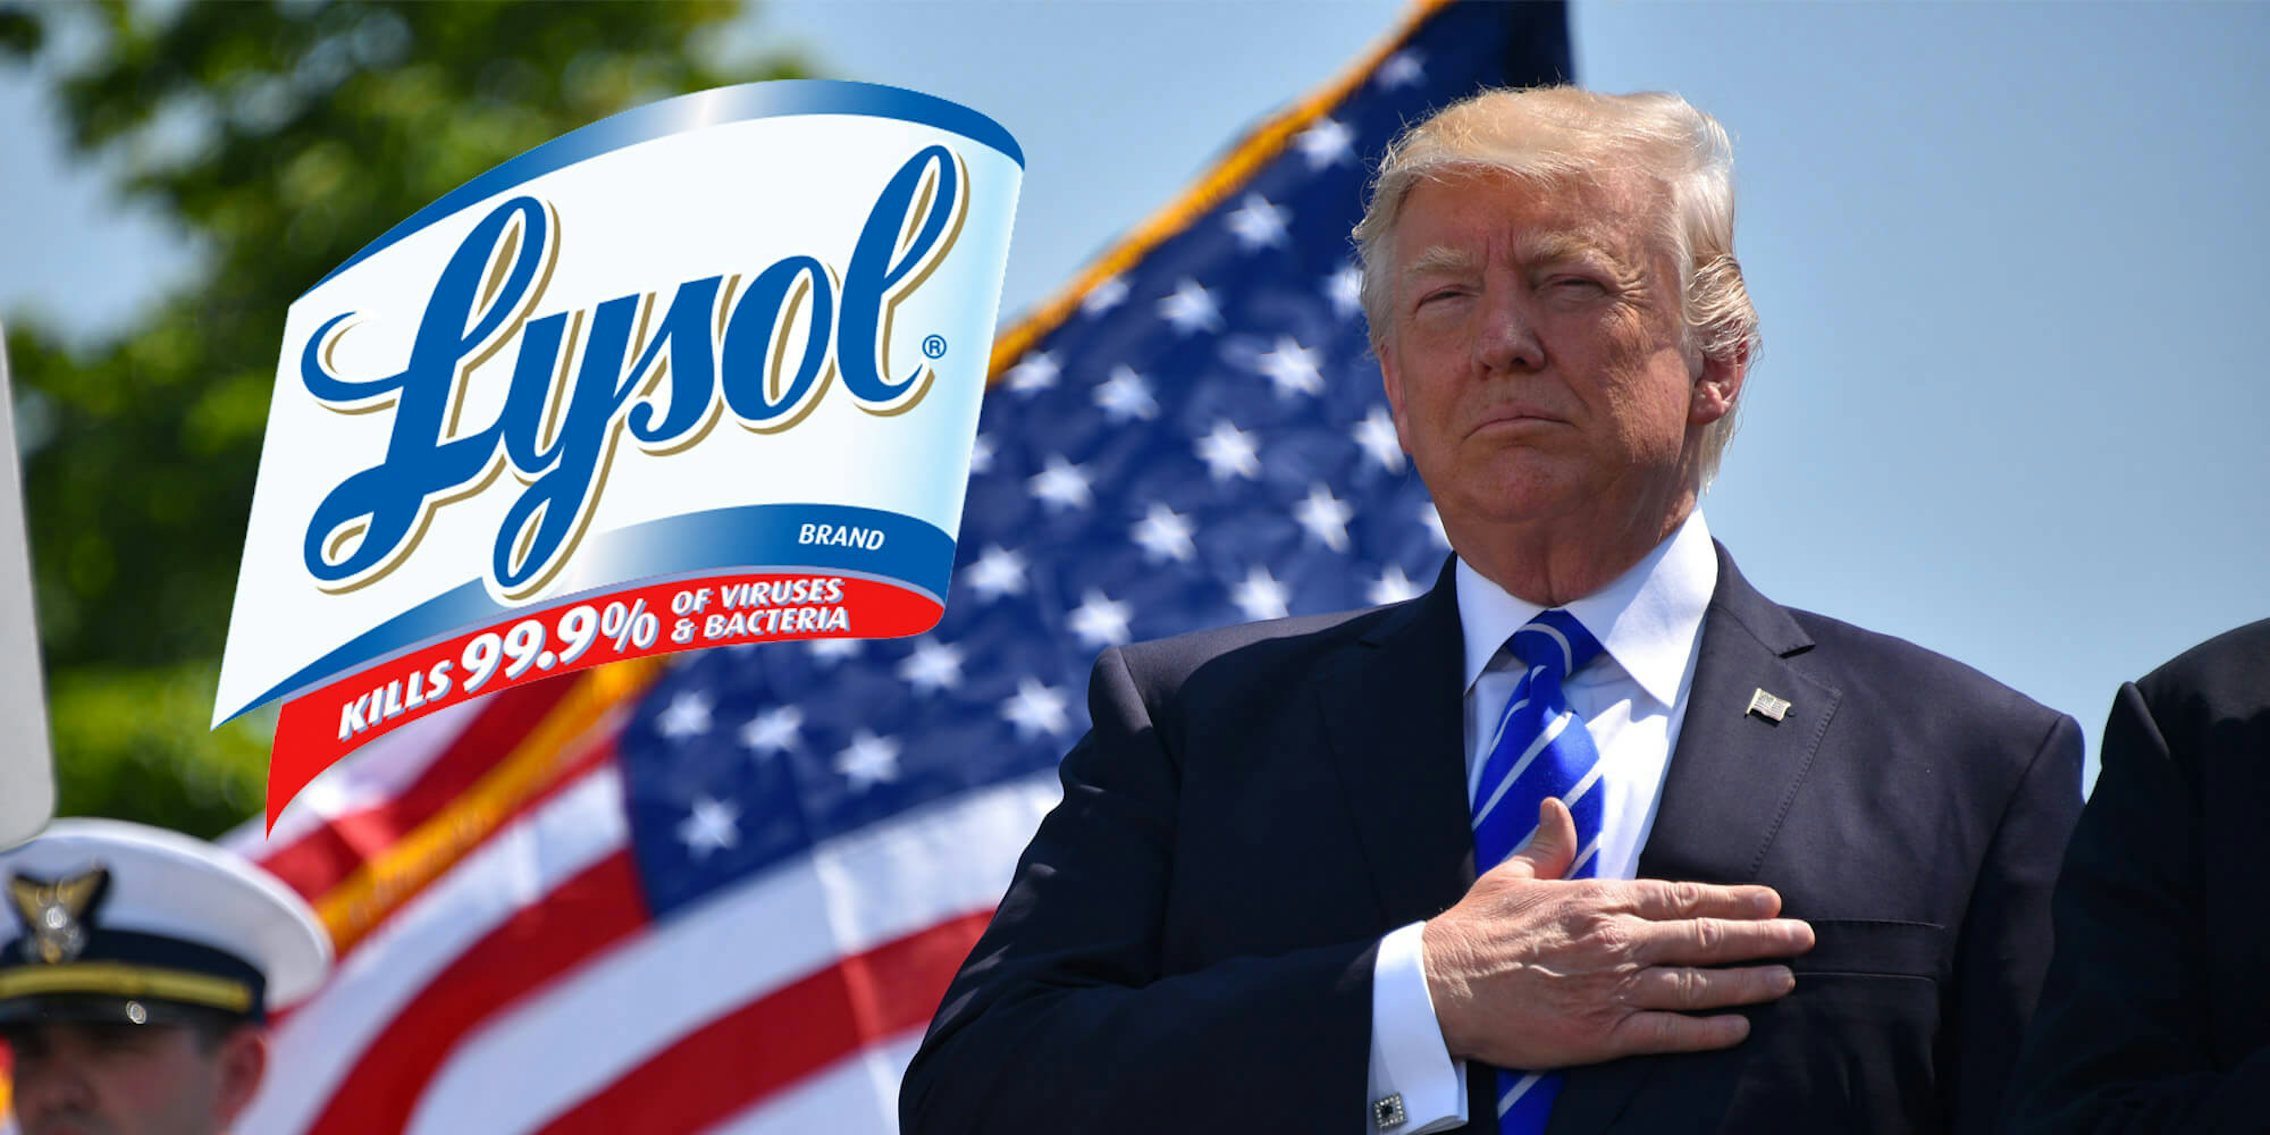 The Lysol logo next to President Donald Trump